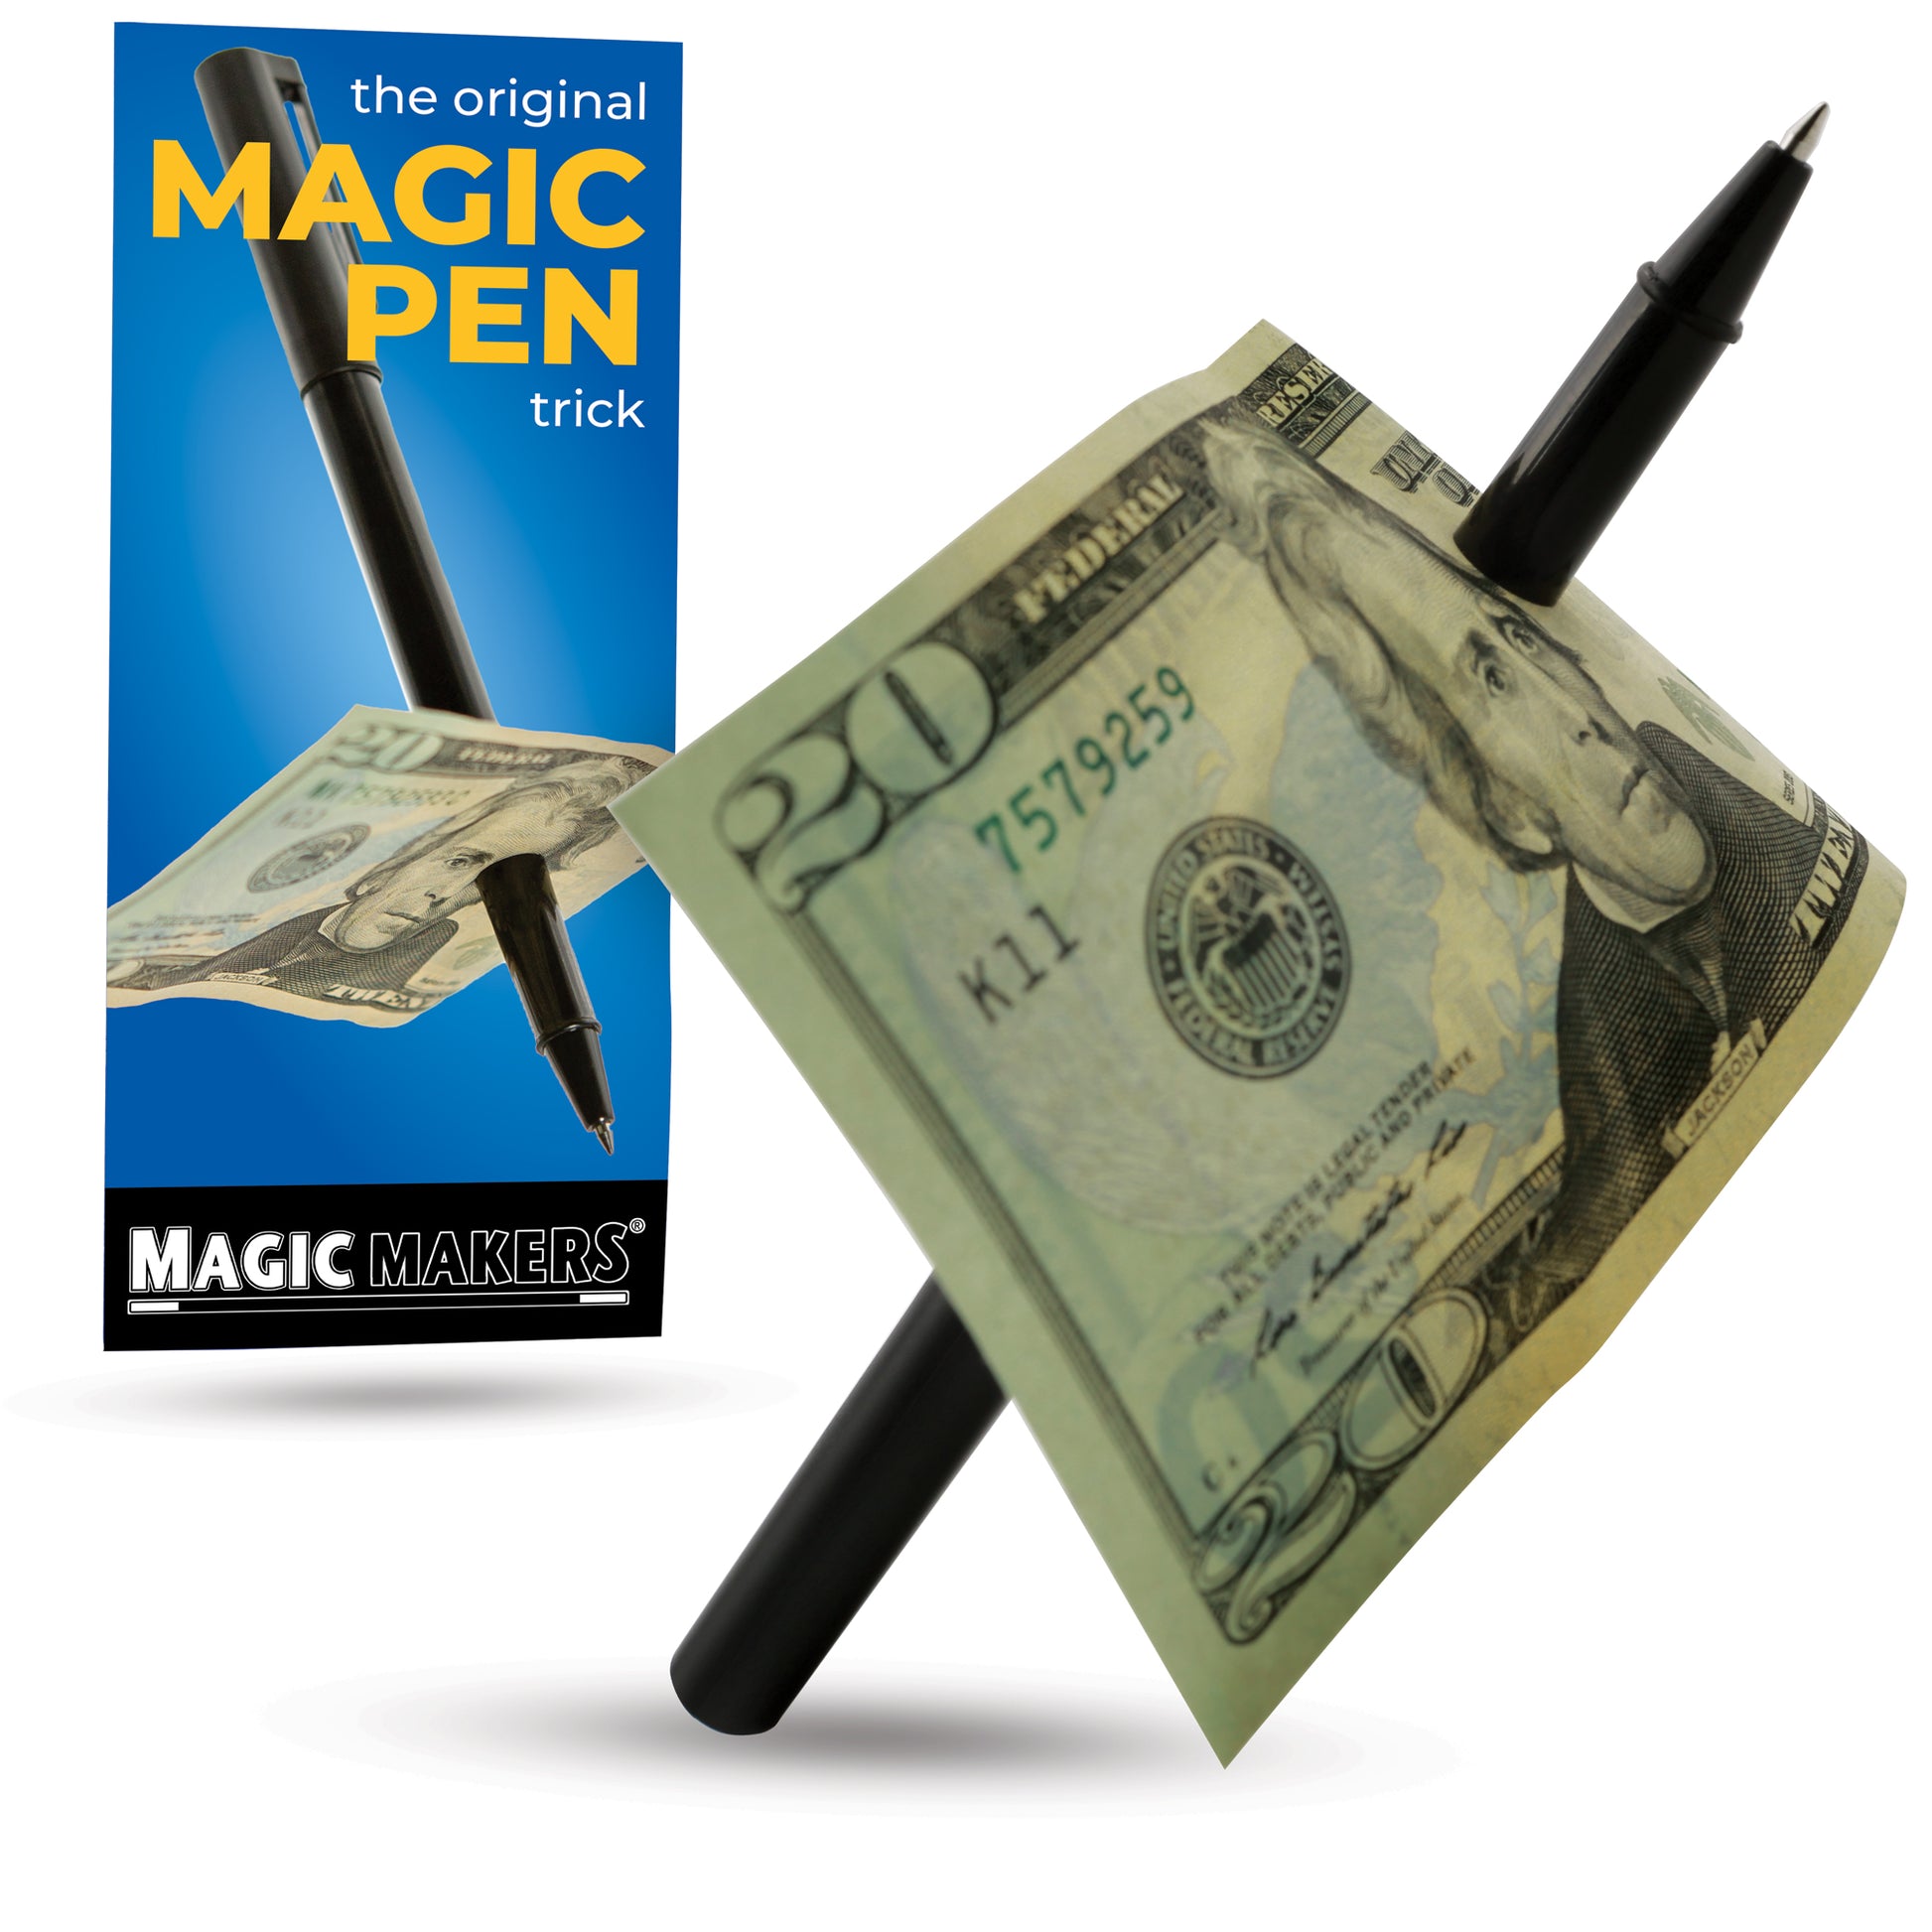 Magic pen